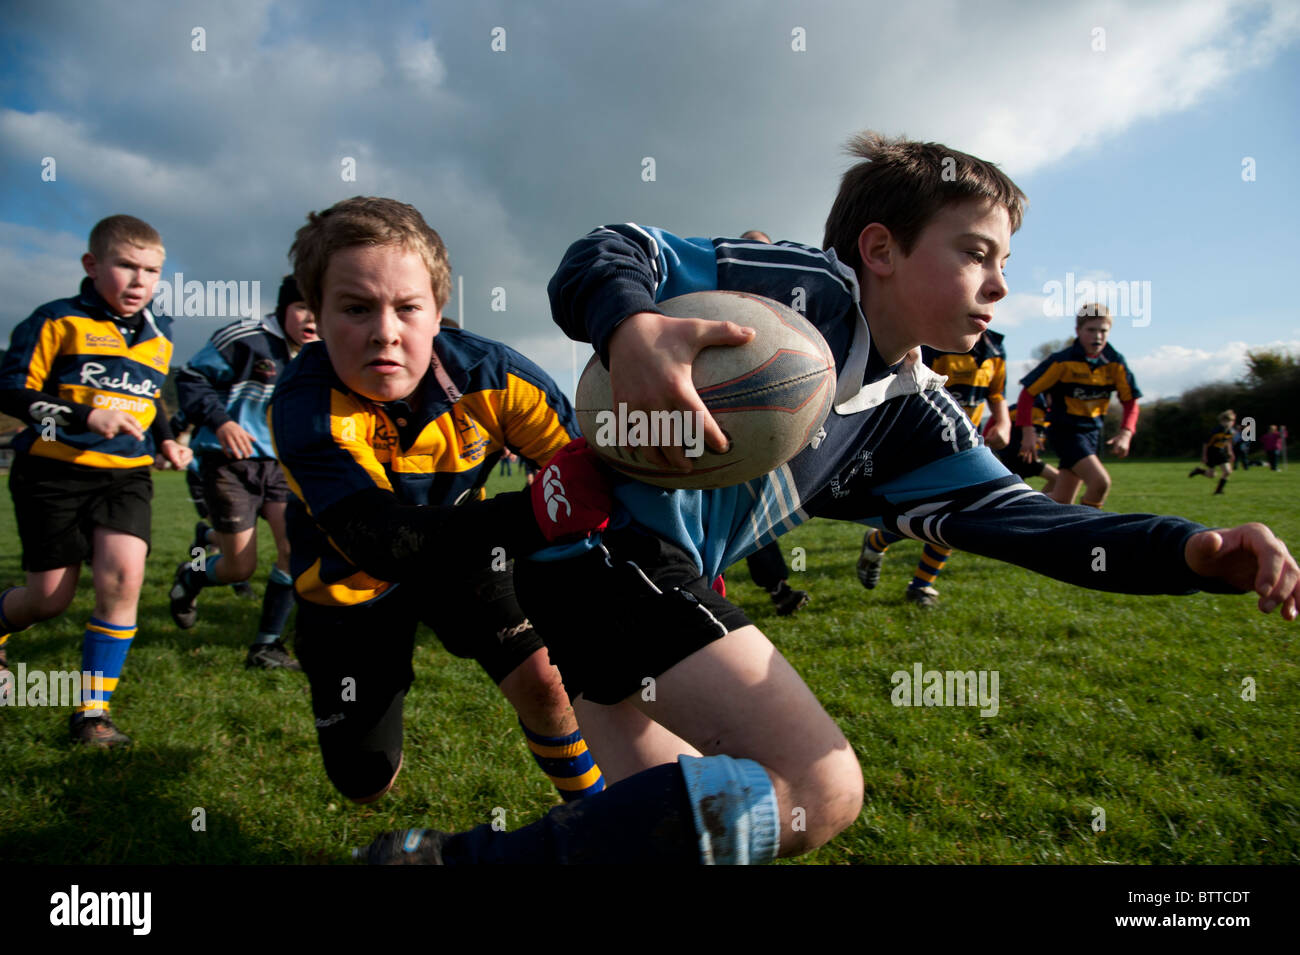 Kids playing rugby immagini e fotografie stock ad alta risoluzione - Alamy